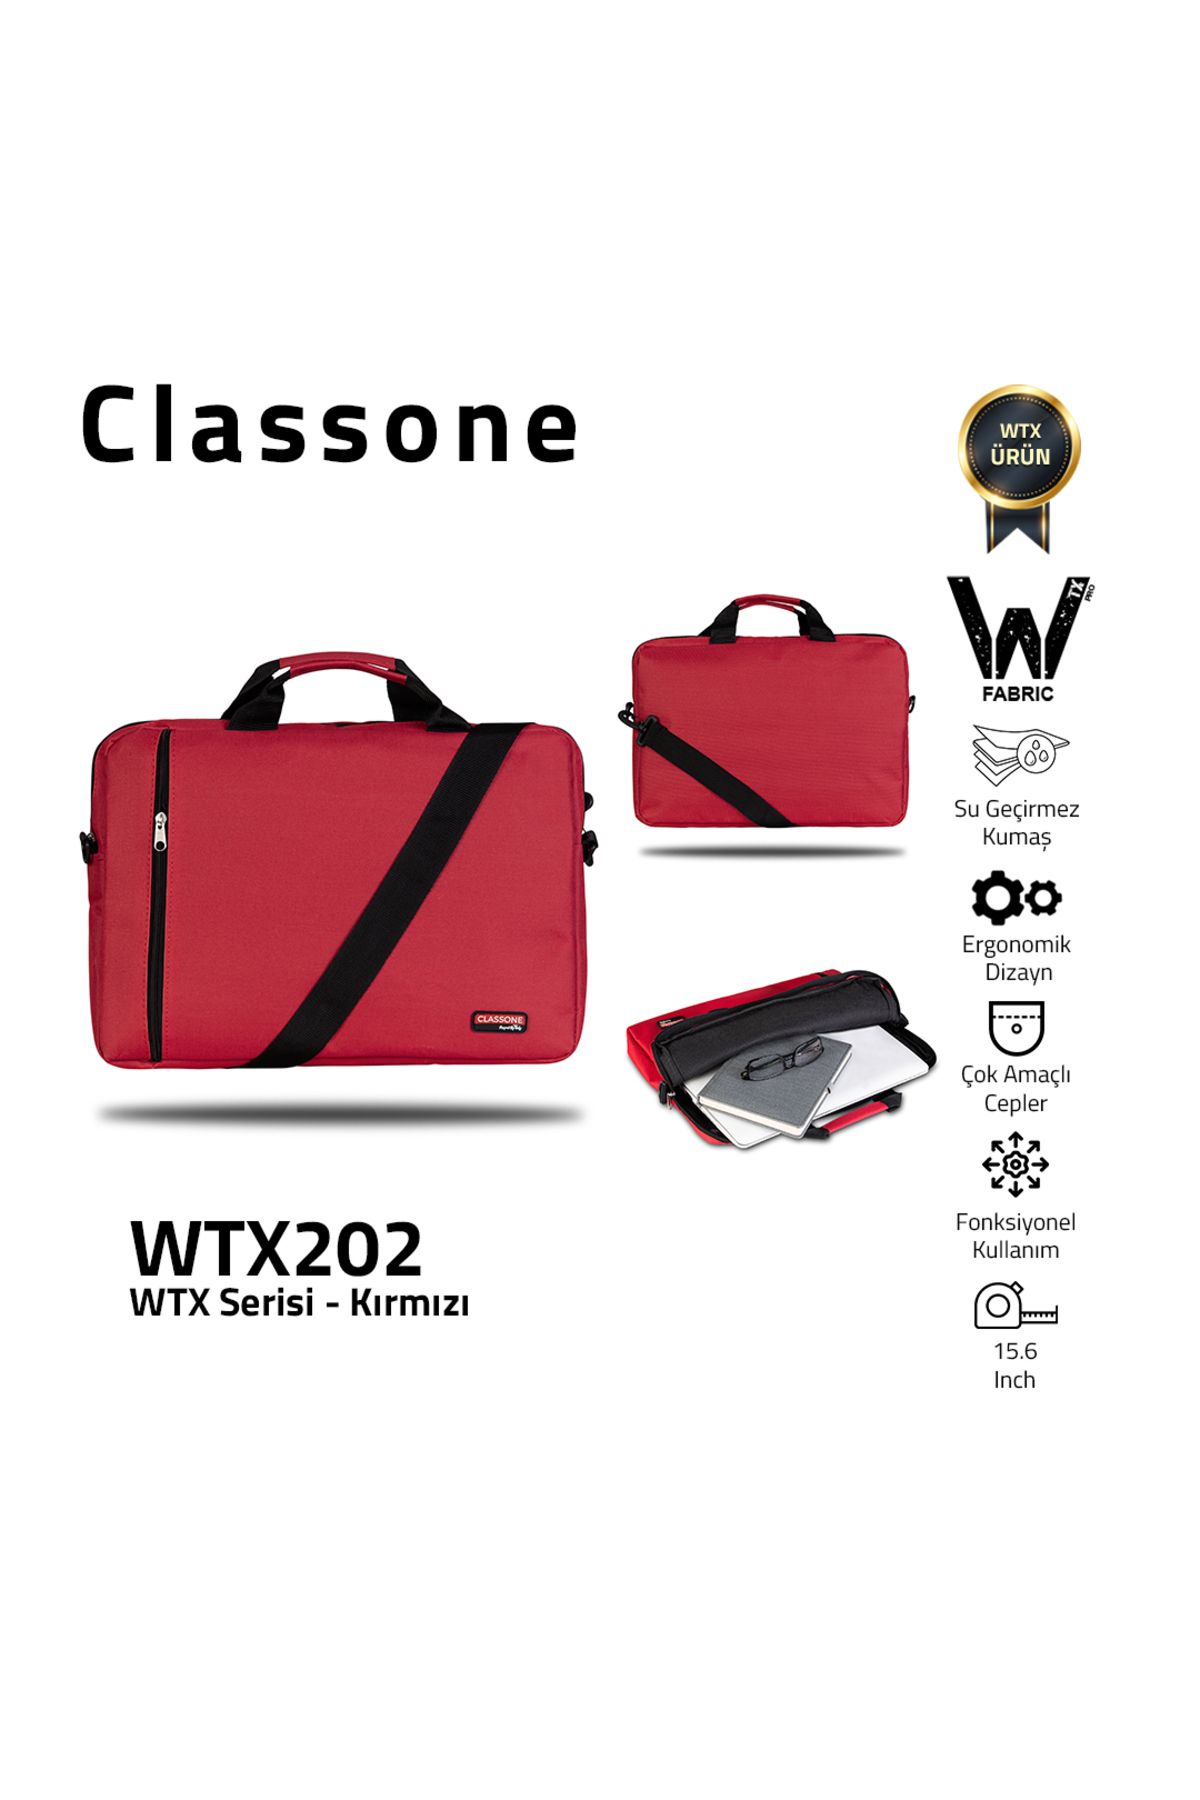 Classone Wtx202 Wtxpro Serisi Su Geçirmez Kumaş 15.6 Inch Macbook, Laptop , Notebook El Çantası- Kırmızı